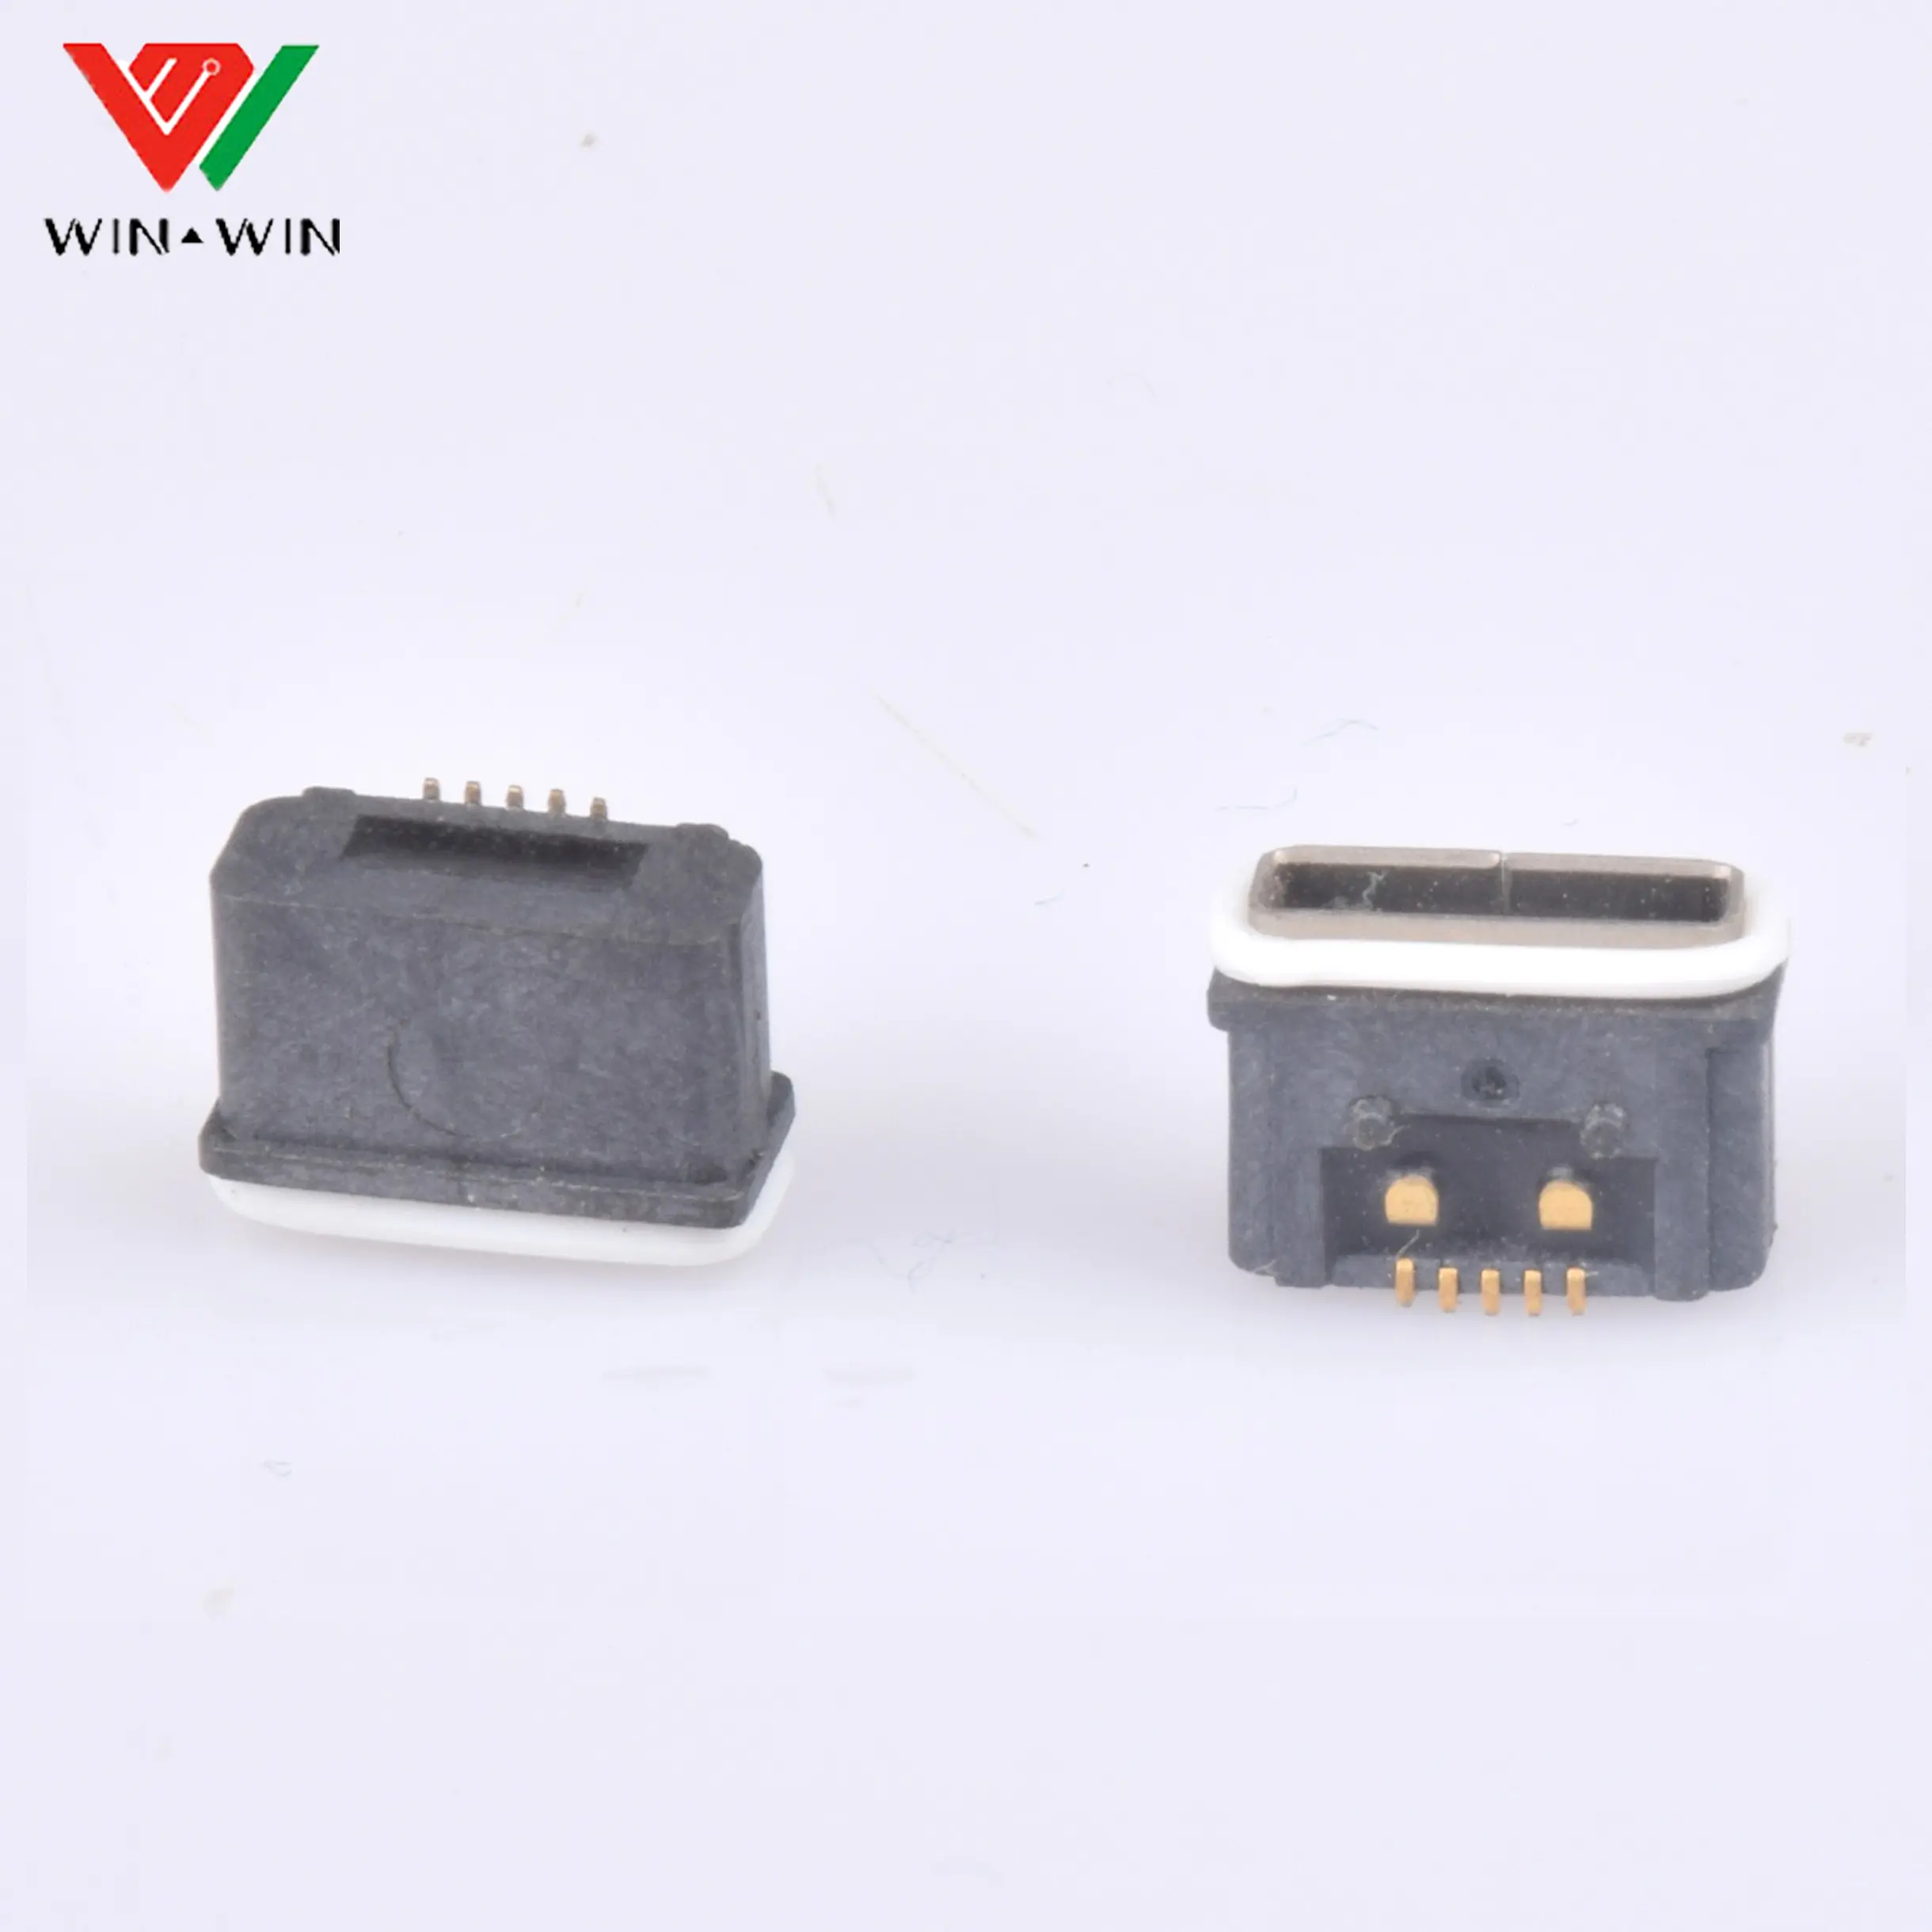 5 Pin Waterproof Female Micro Usb Connector